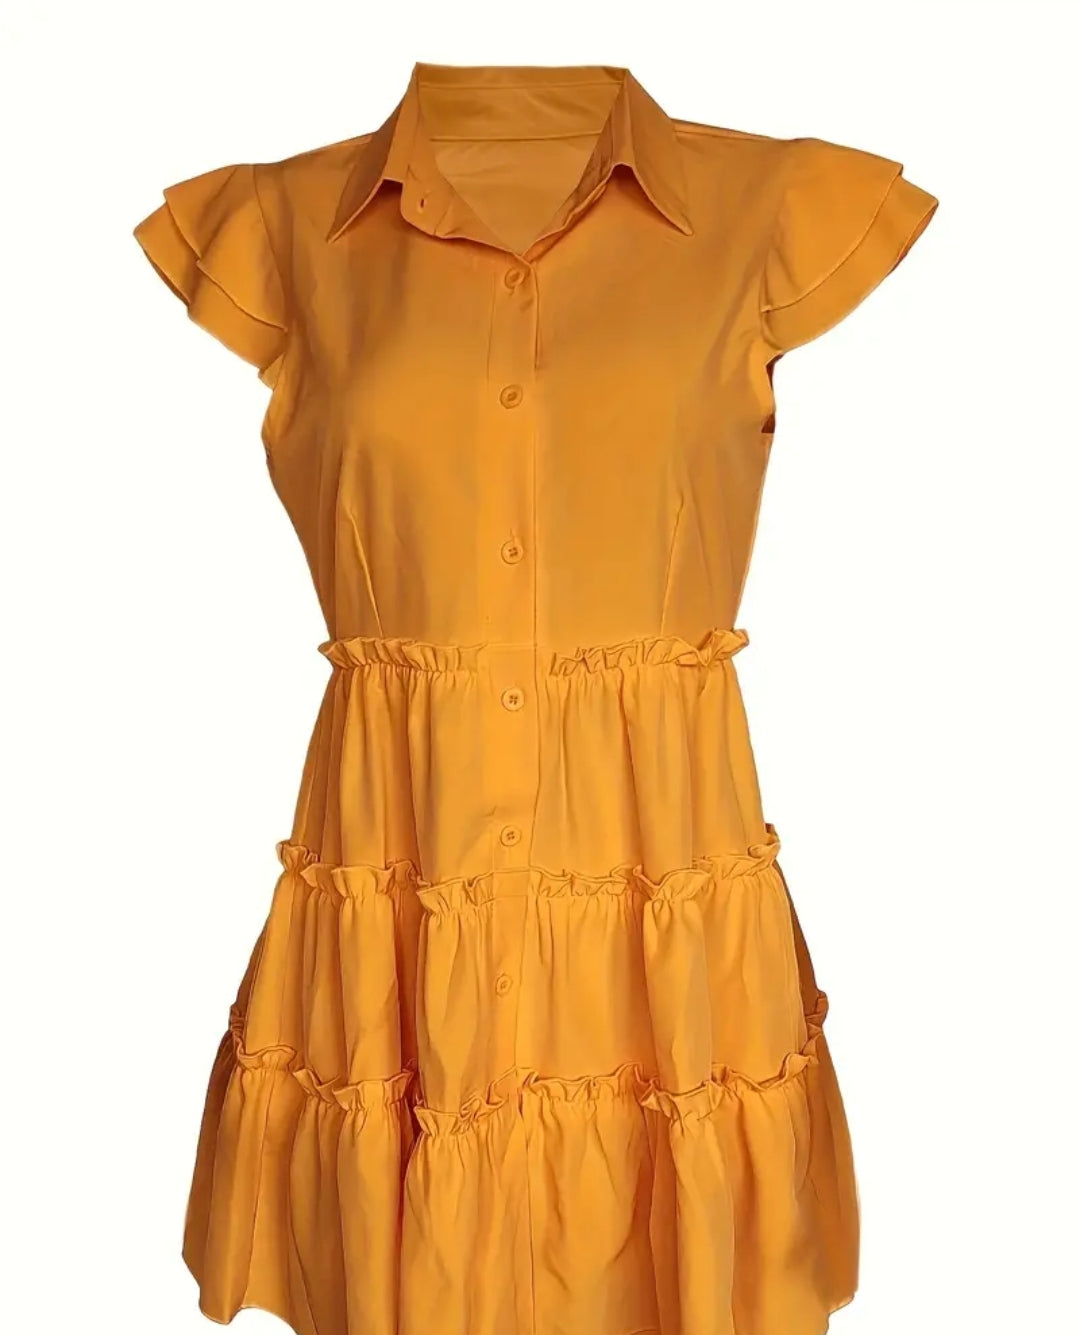 Vestido amarillo casual sin manga  con botones